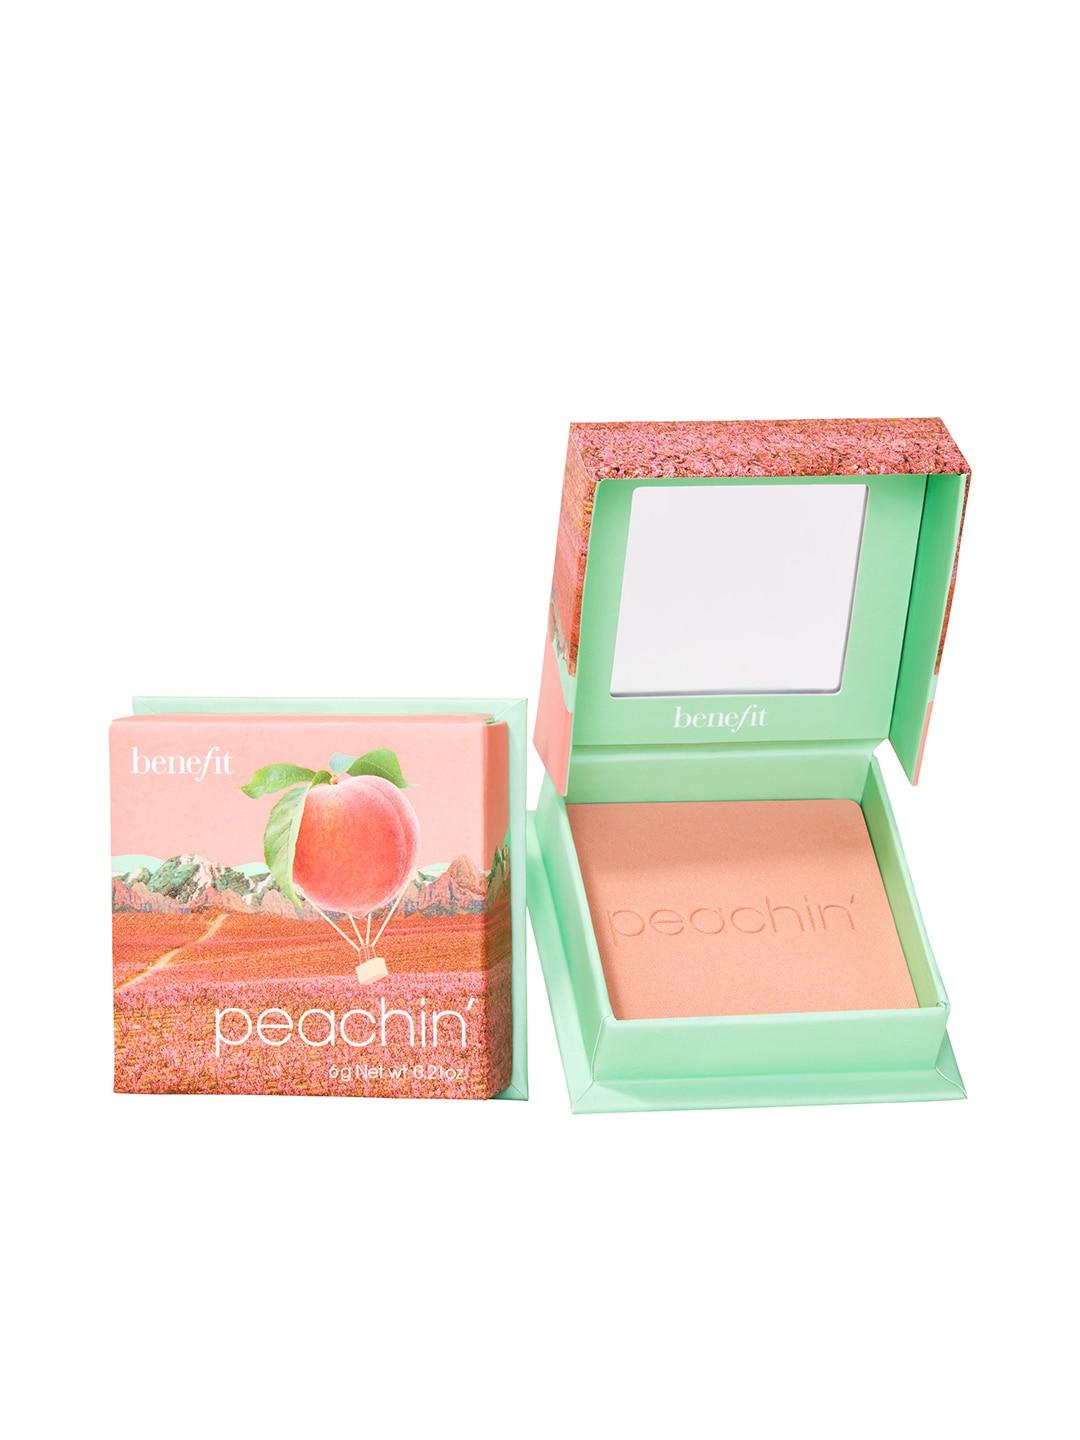 Benefit Cosmetics Smudge-Proof Soft Shimmer Finish Golden Peach Blush 6 g - Peachin